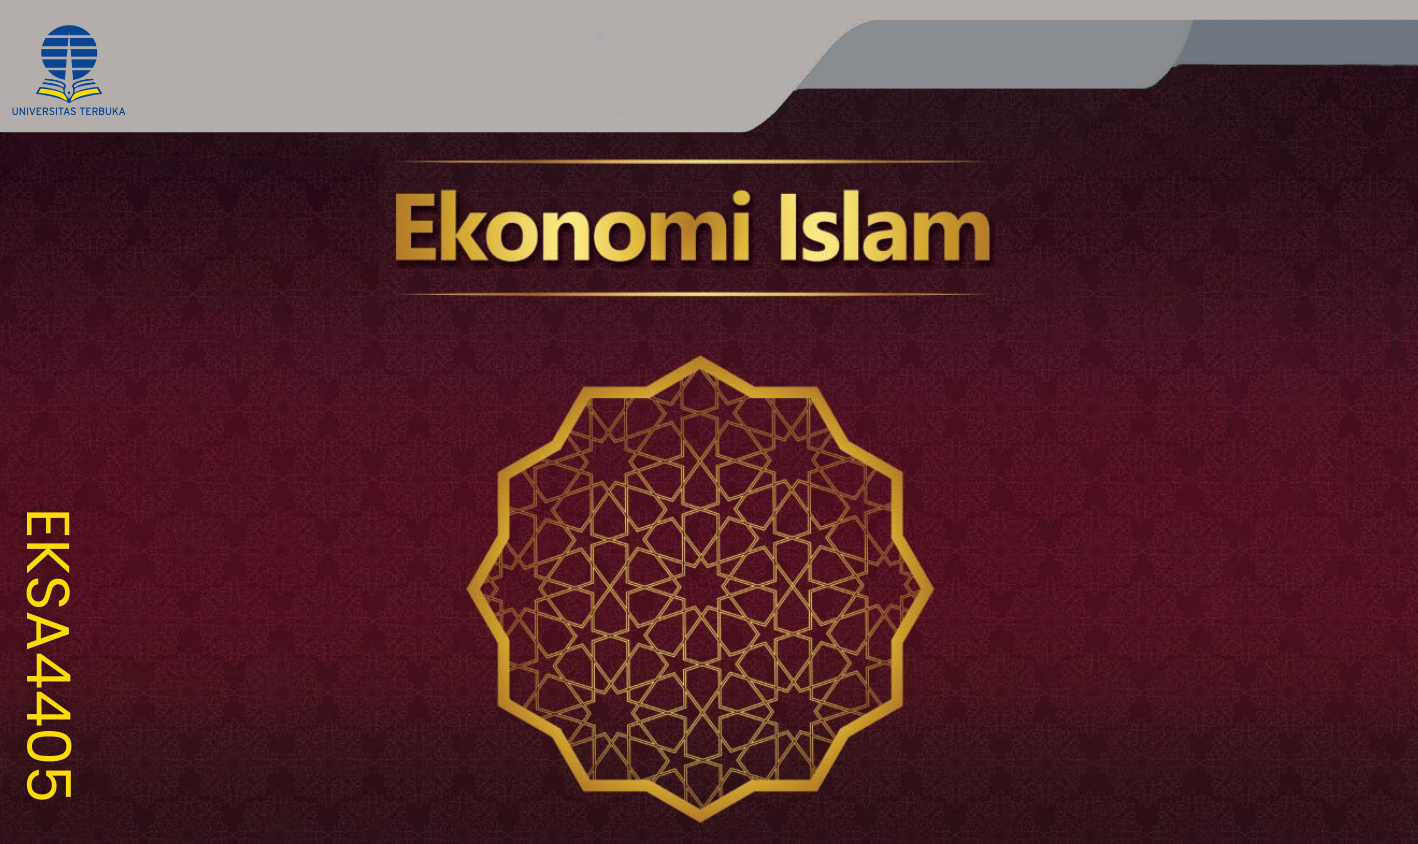 Ekonomi Islam EKSA4405